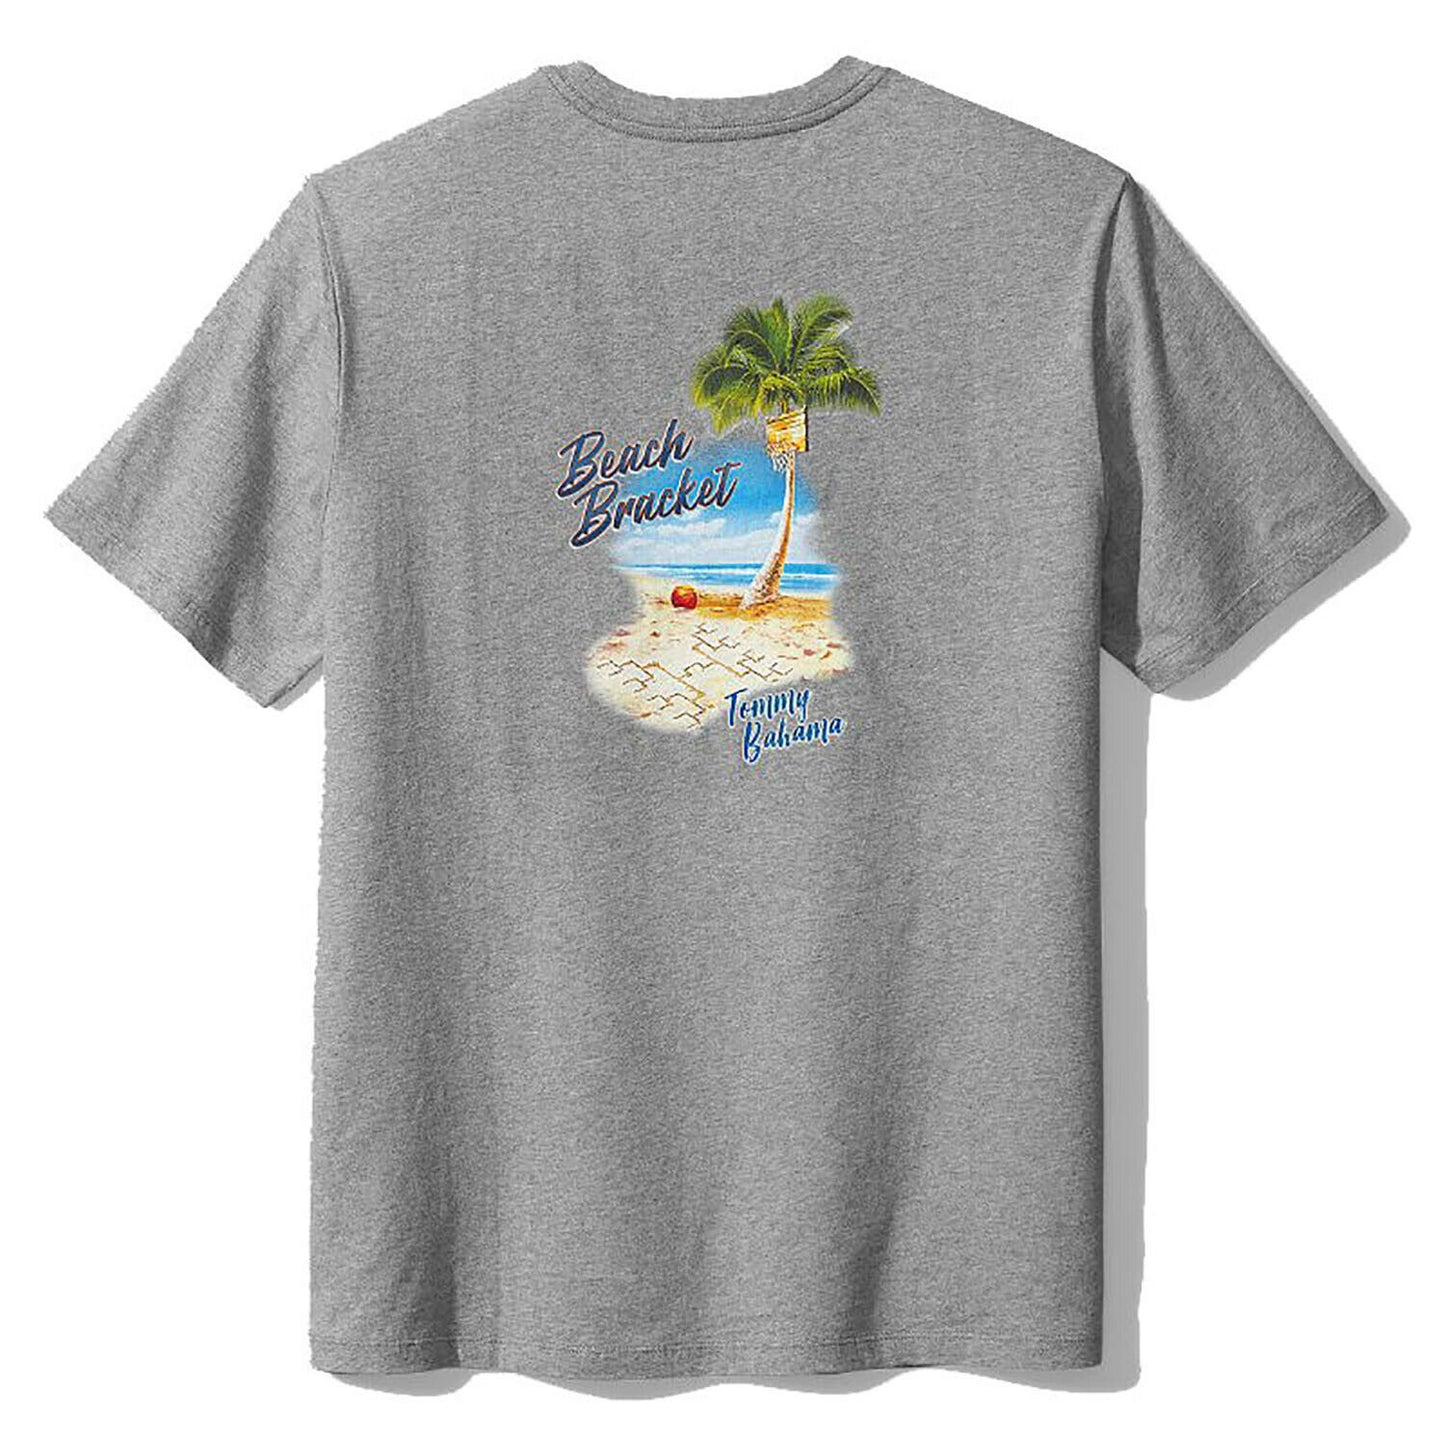 TOMMY BAHAMA Beach Bracket Men's T-Shirt - Grey -  S M L XL 2XL